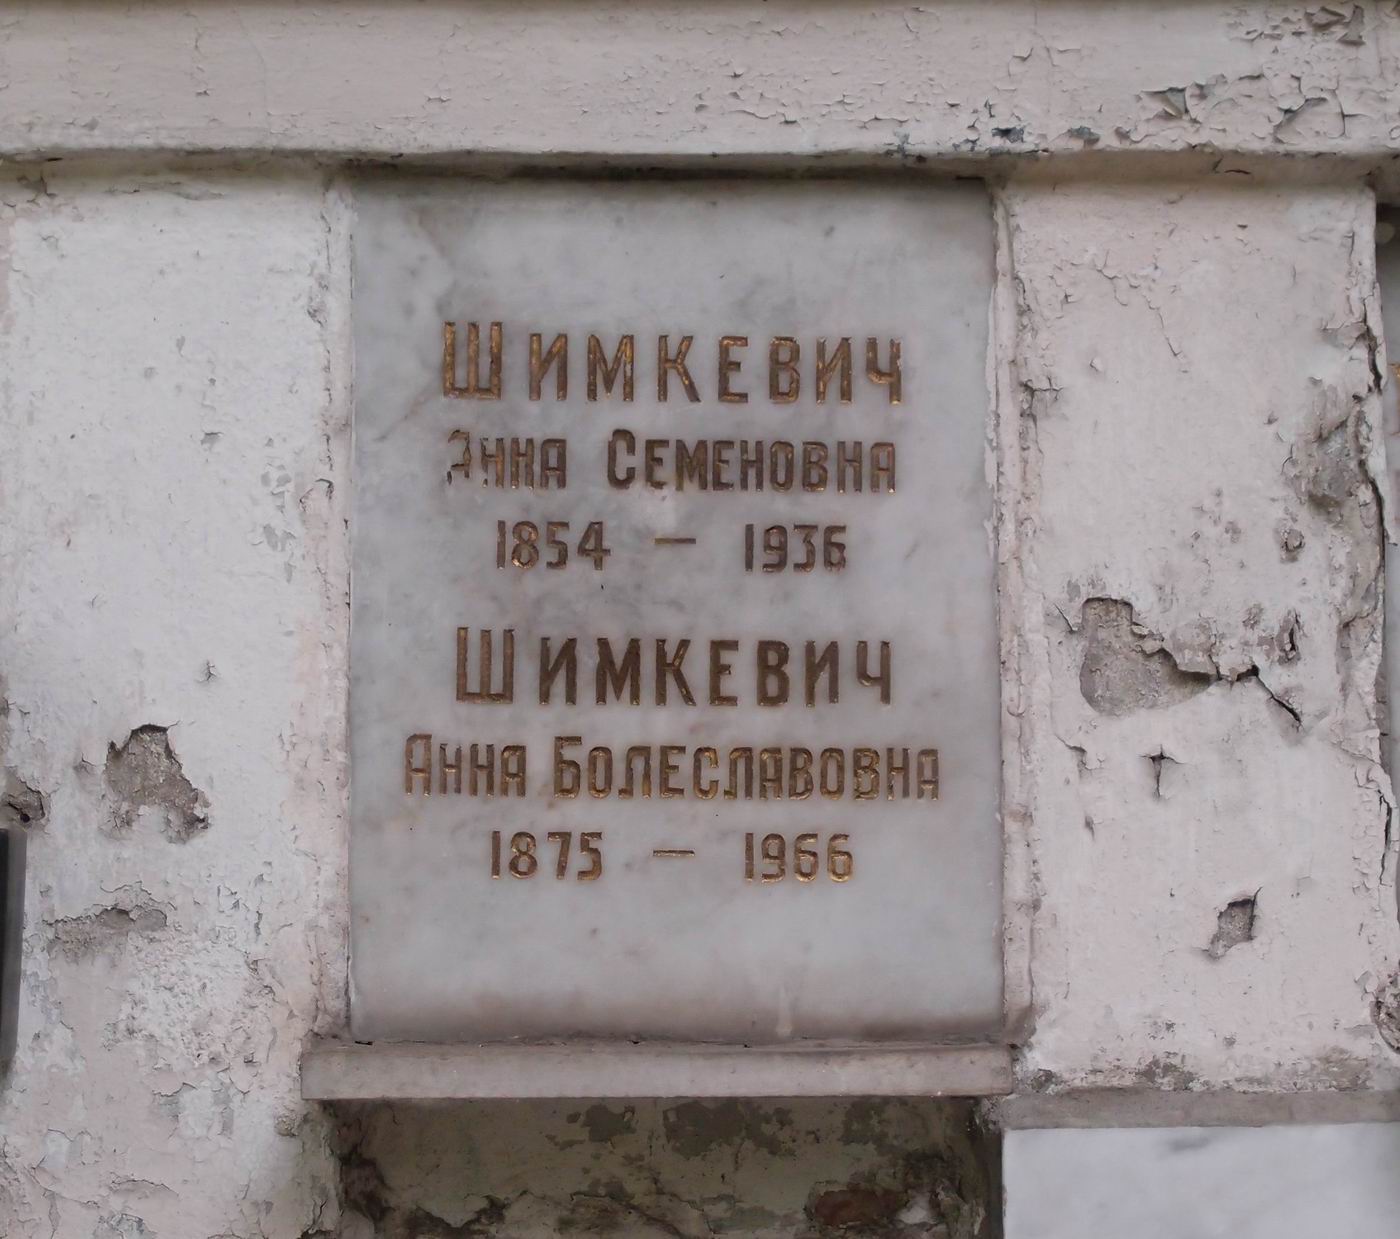 Плита на нише Шимкевич А.С. (1854-1936), на Новодевичьем кладбище (колумбарий [22]-4-1).